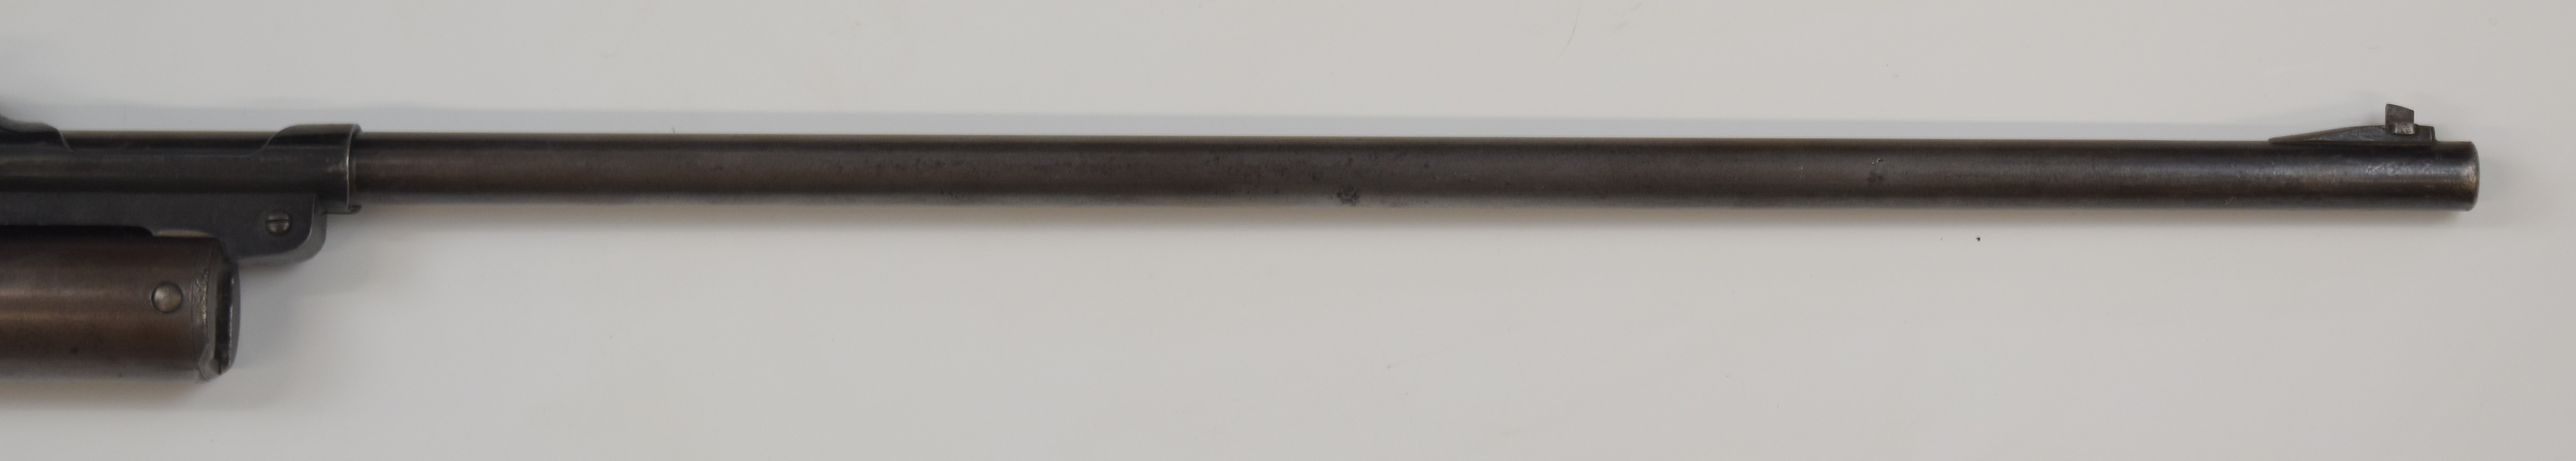 Webley Service Mark II .22 air rifle with interchangeable barrel, adjustable pop-up peep hole target - Image 5 of 10